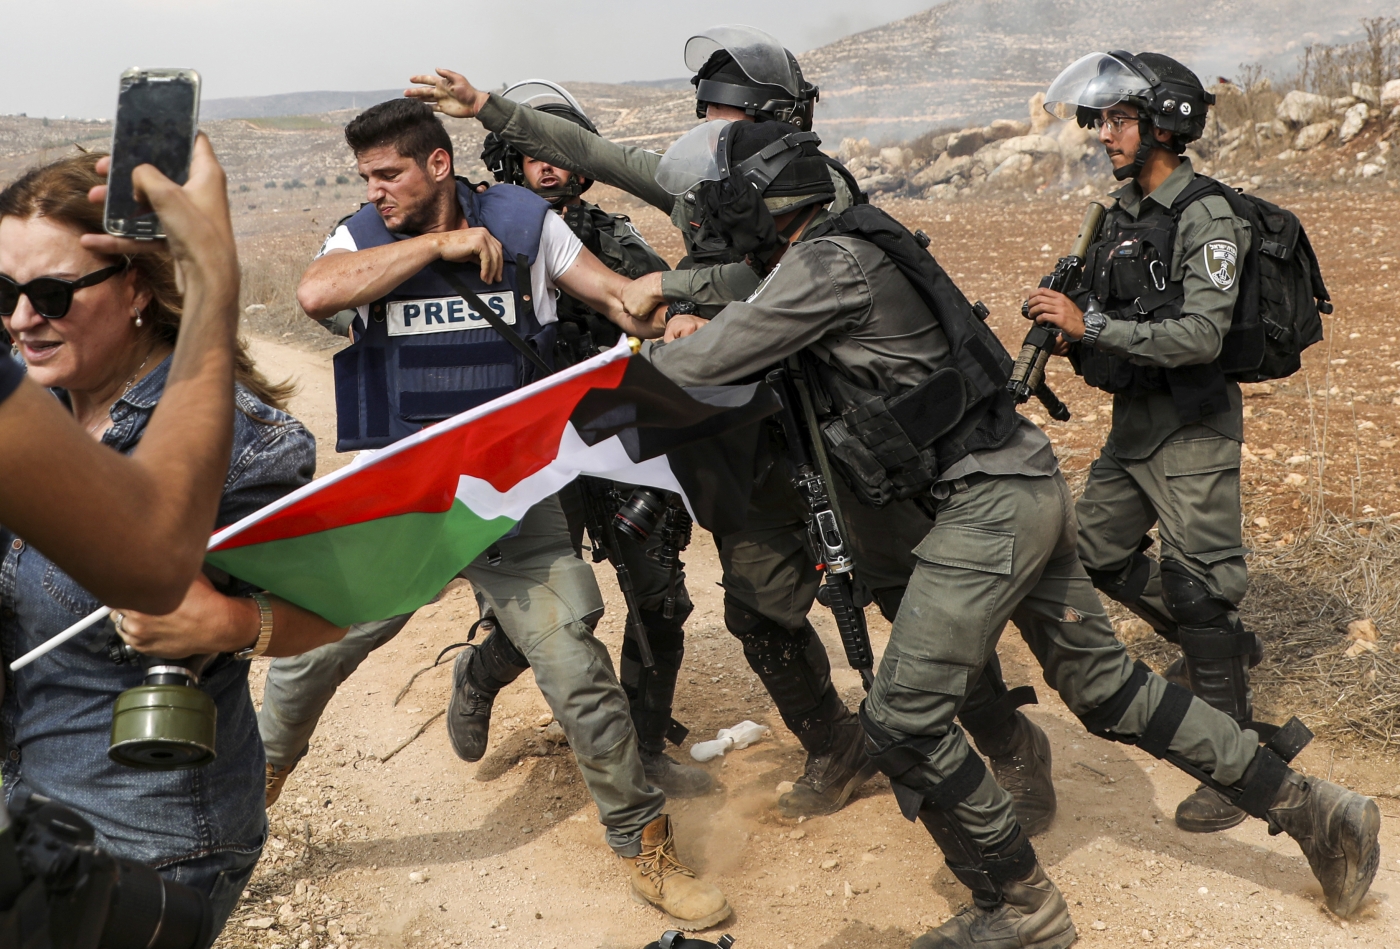 Why israel attack palestine